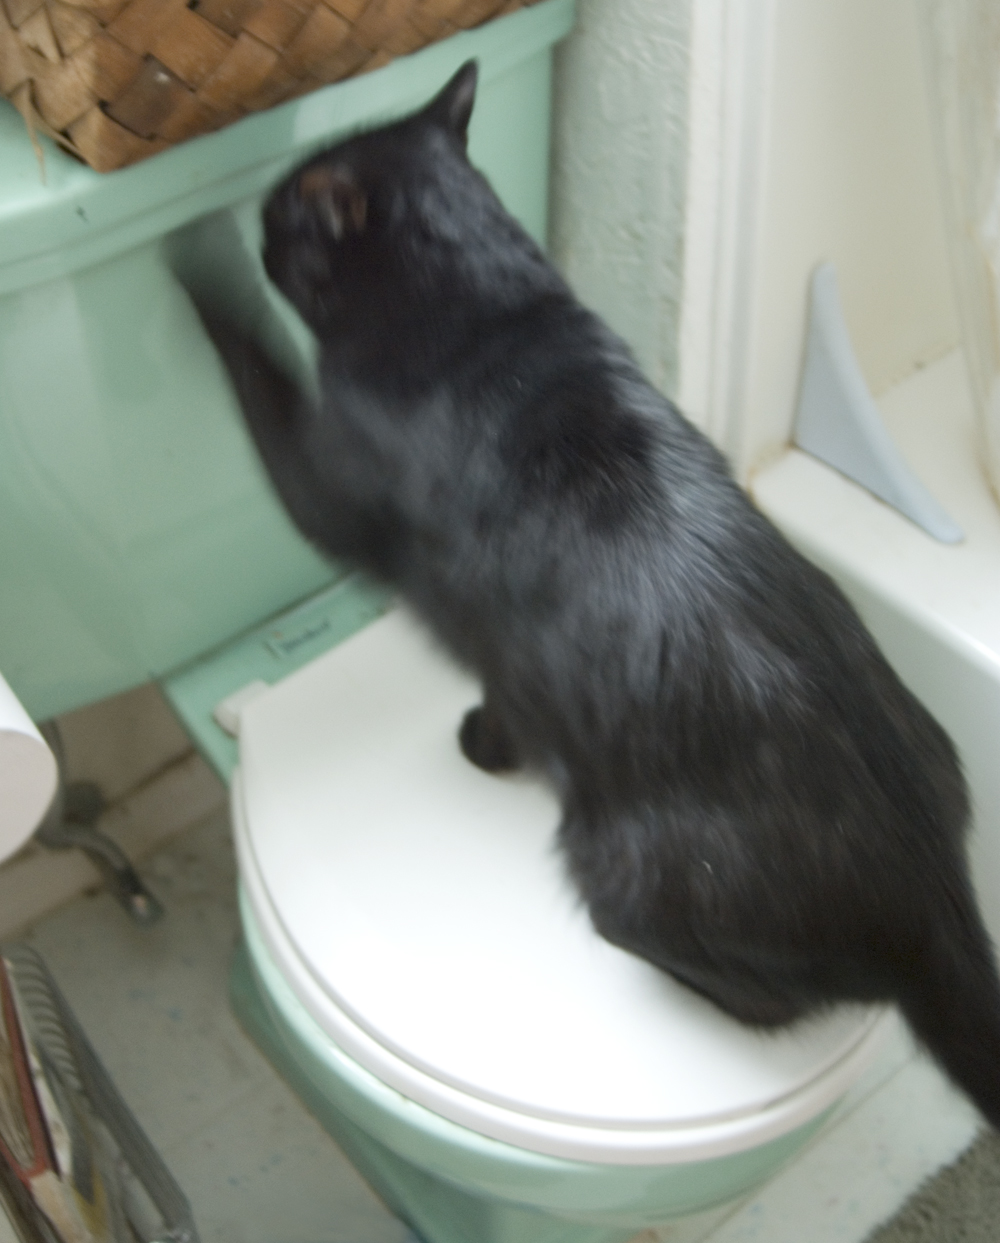 black cat scratching at toilet tank